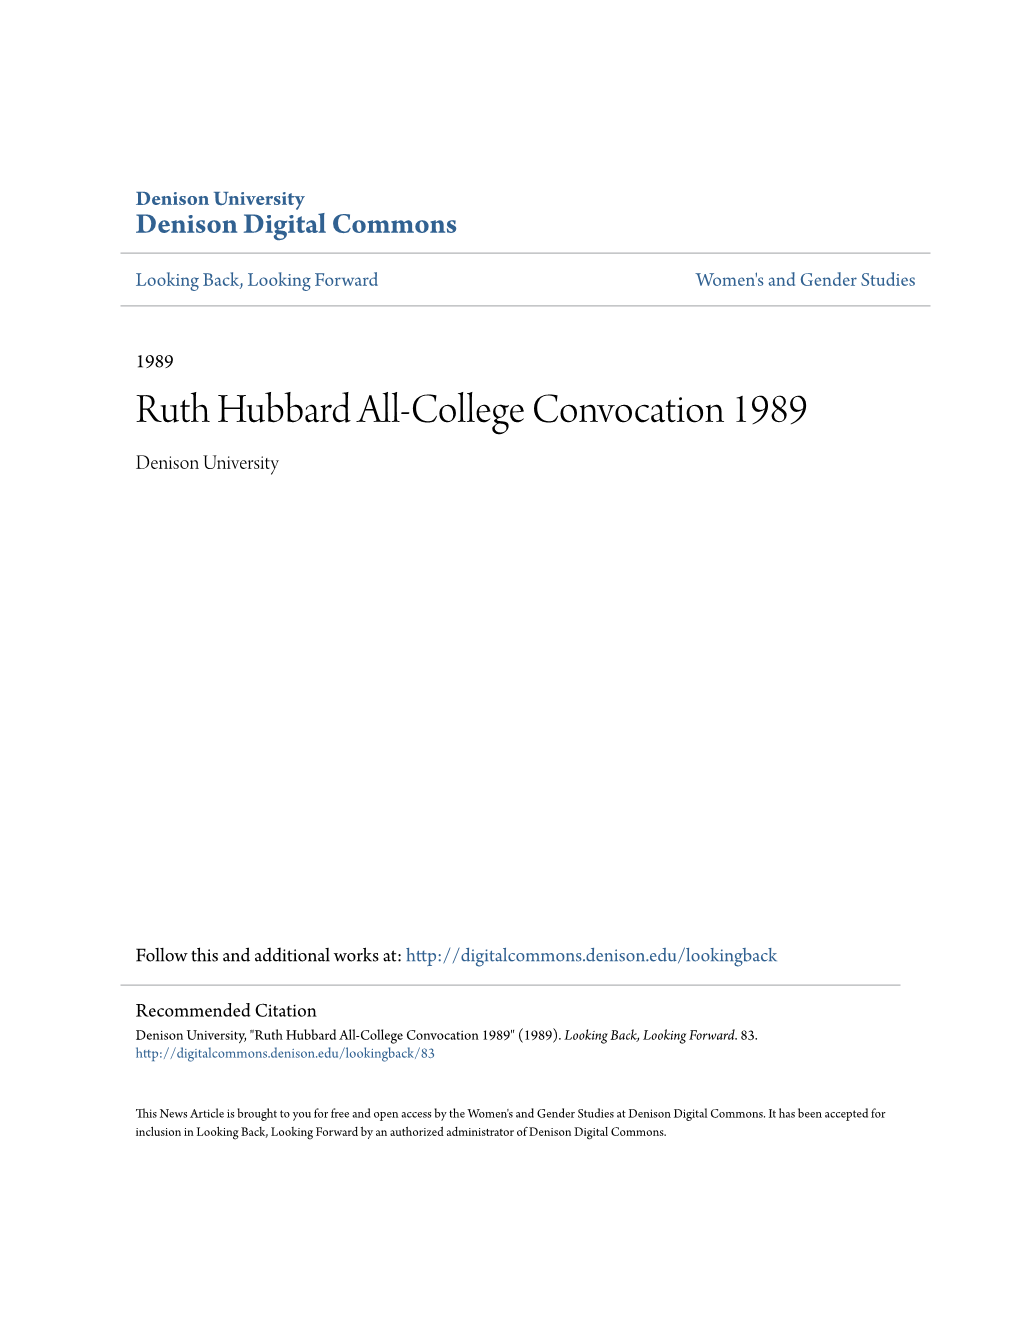 Ruth Hubbard All-College Convocation 1989 Denison University